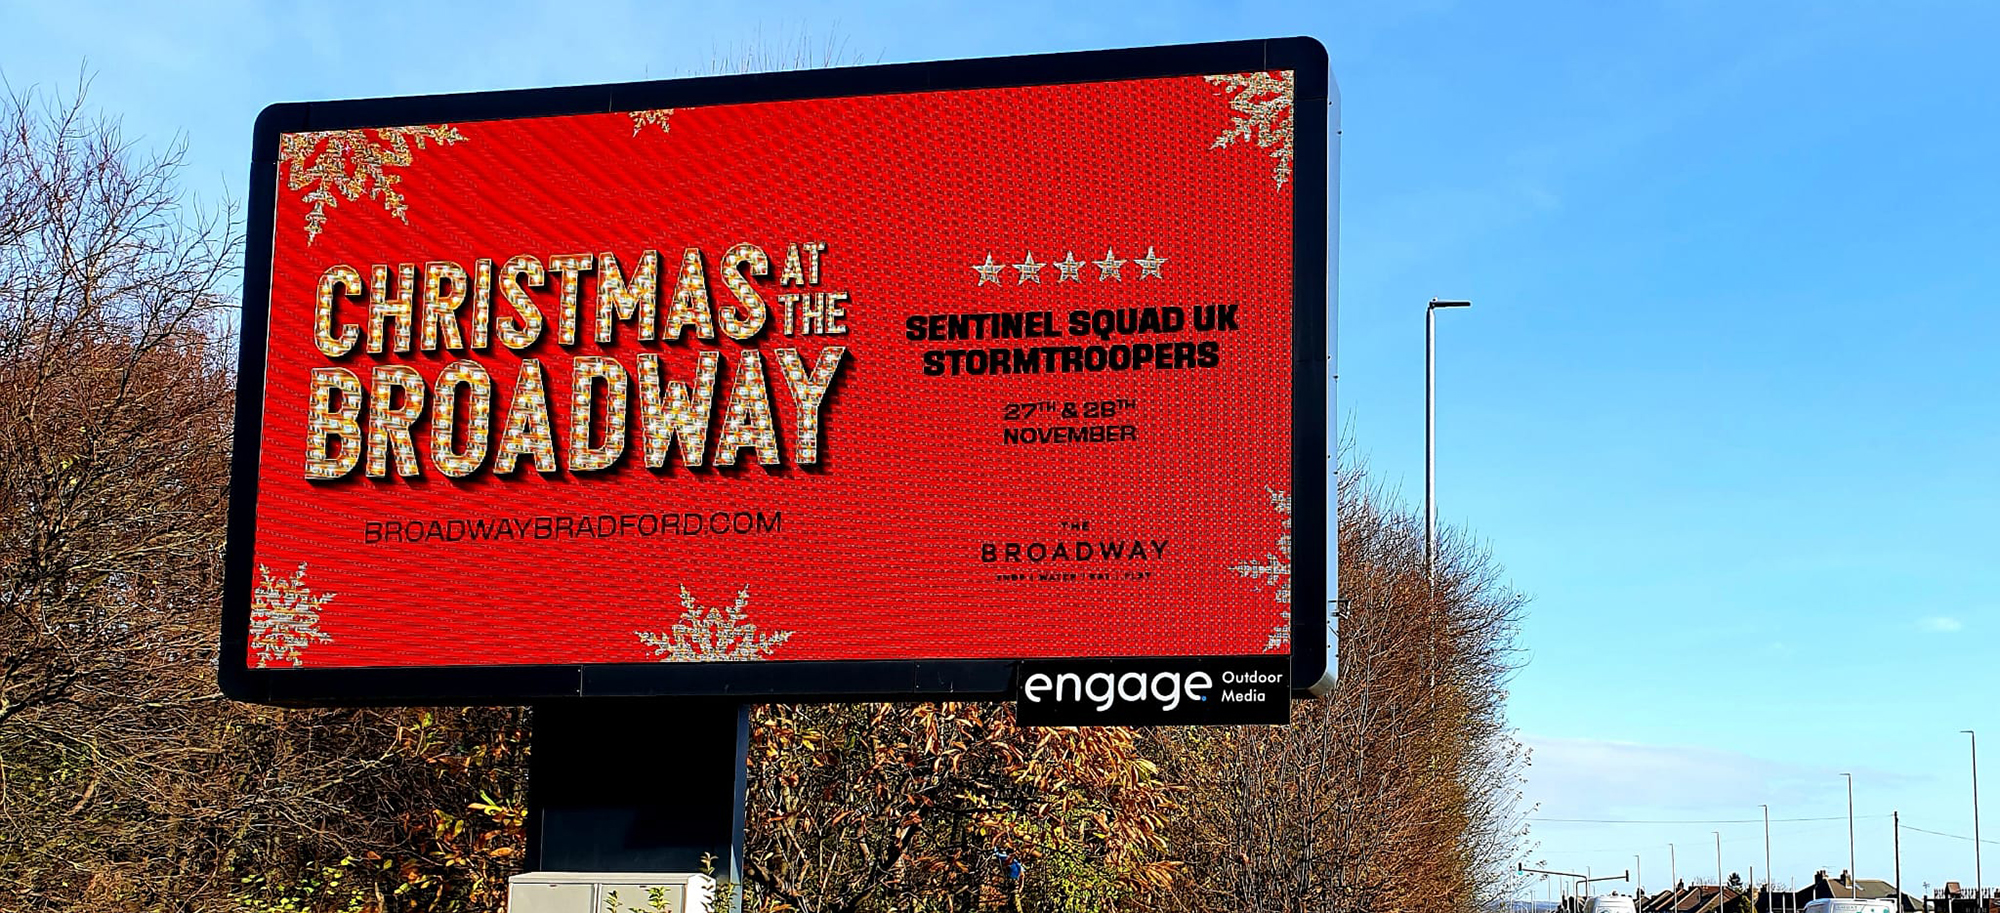 The Broadway Bradford